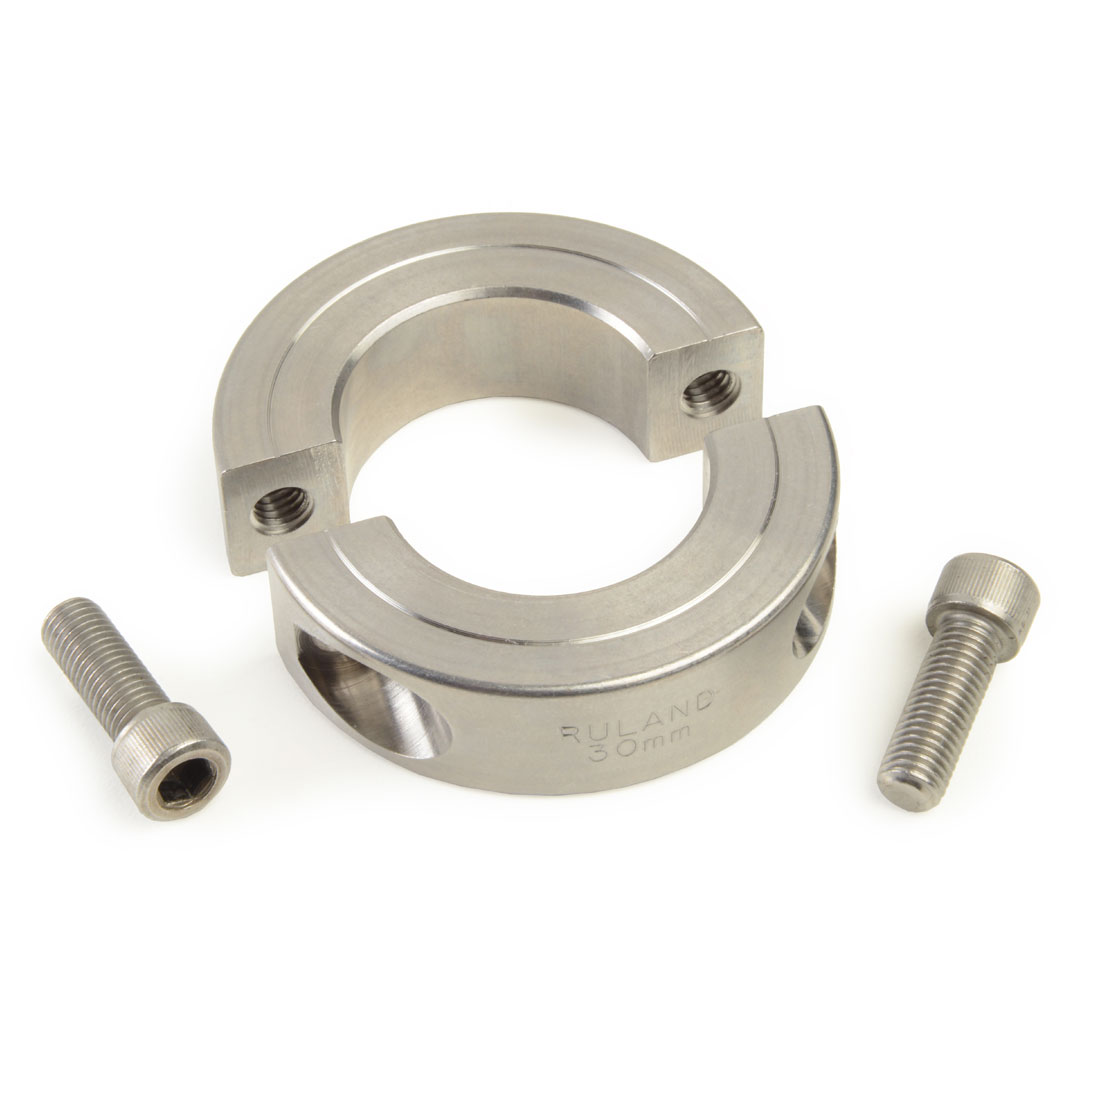 40mm Top quality 6mm Solid steel metal shaft collars Plus locking grub screw 